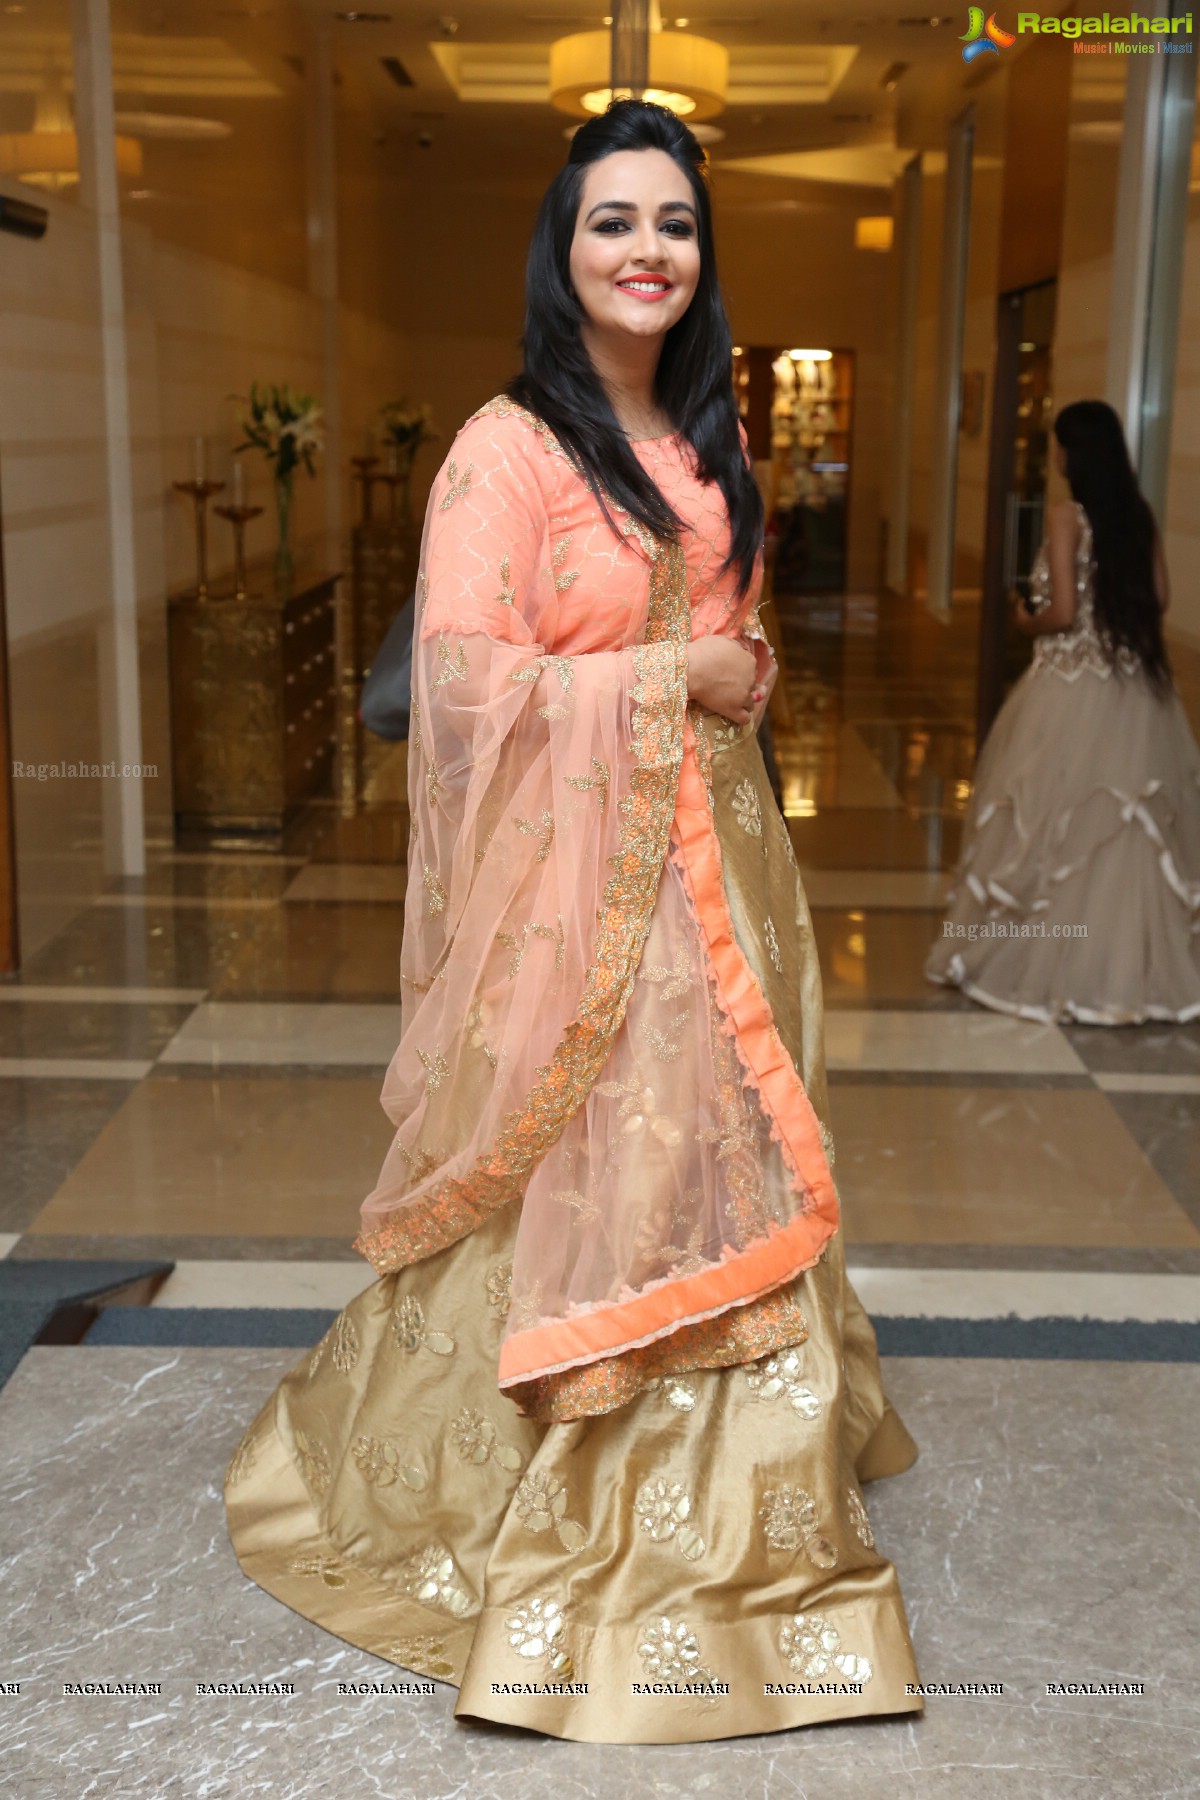 Grand Curtain Raiser of Sutraa Fashion Exhibition at Hotel Marigold, Ameerpet, Hyderabad